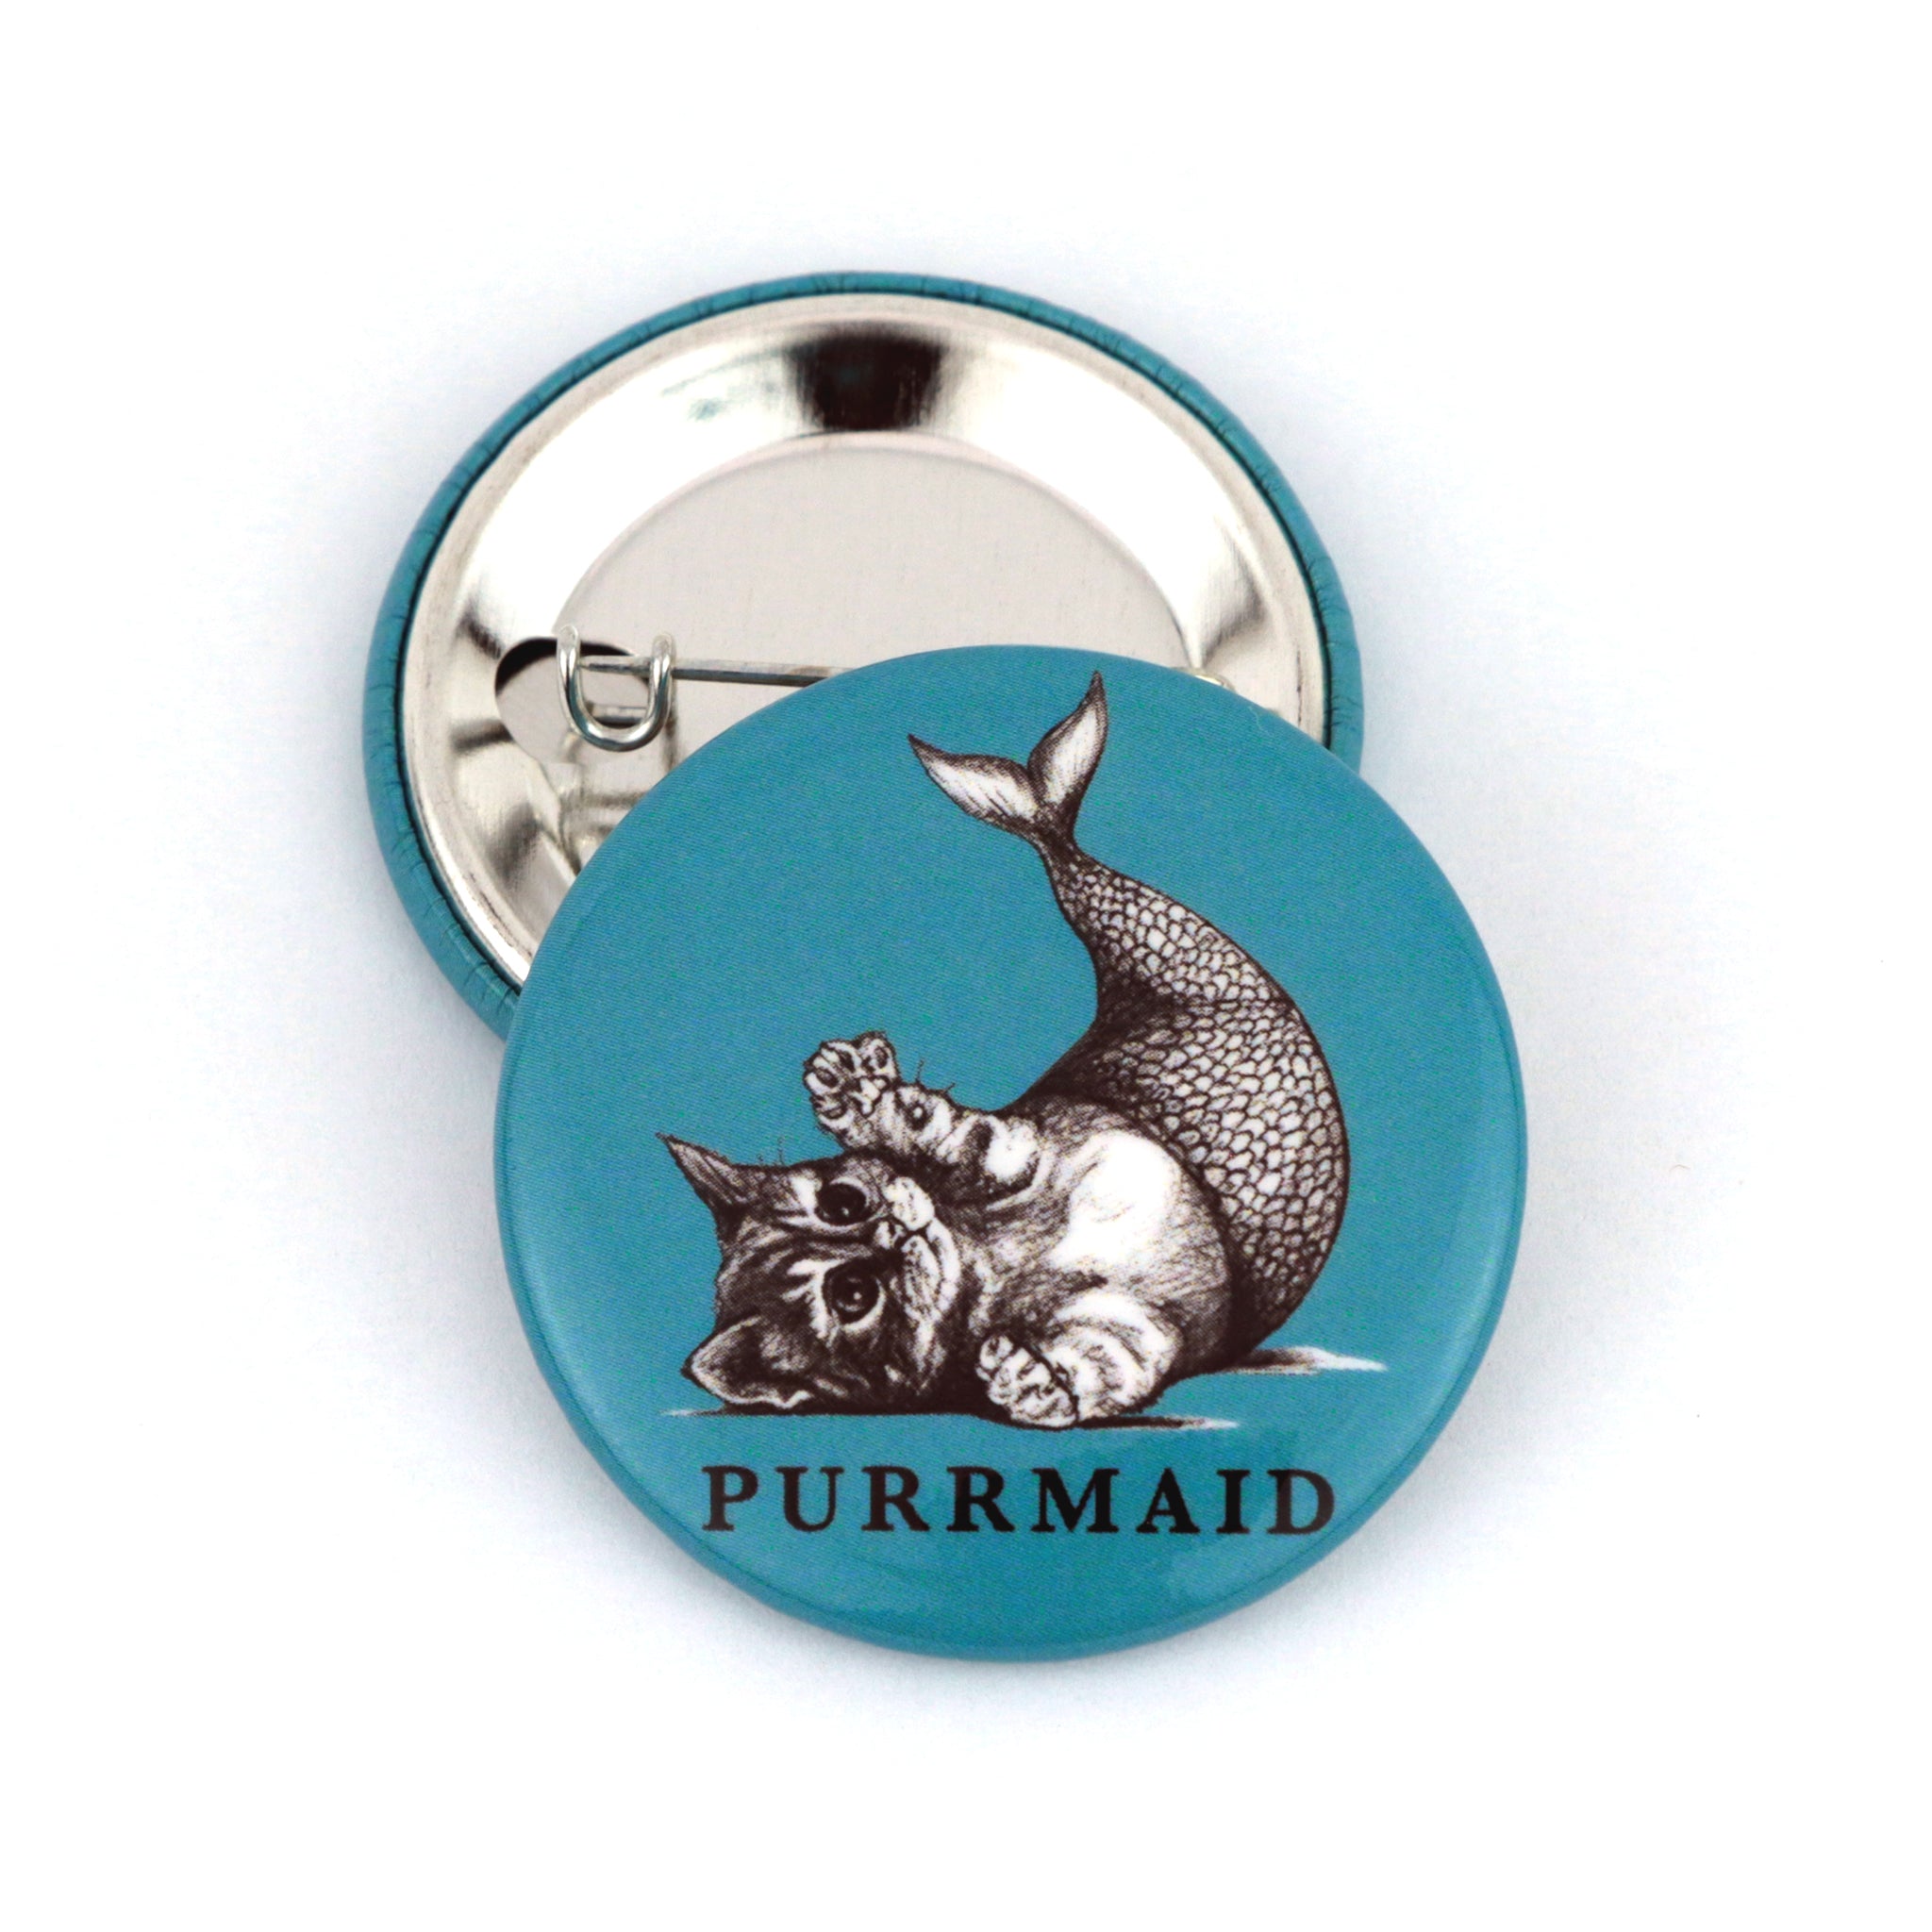 Purrmaid 1.5" Pinback Button